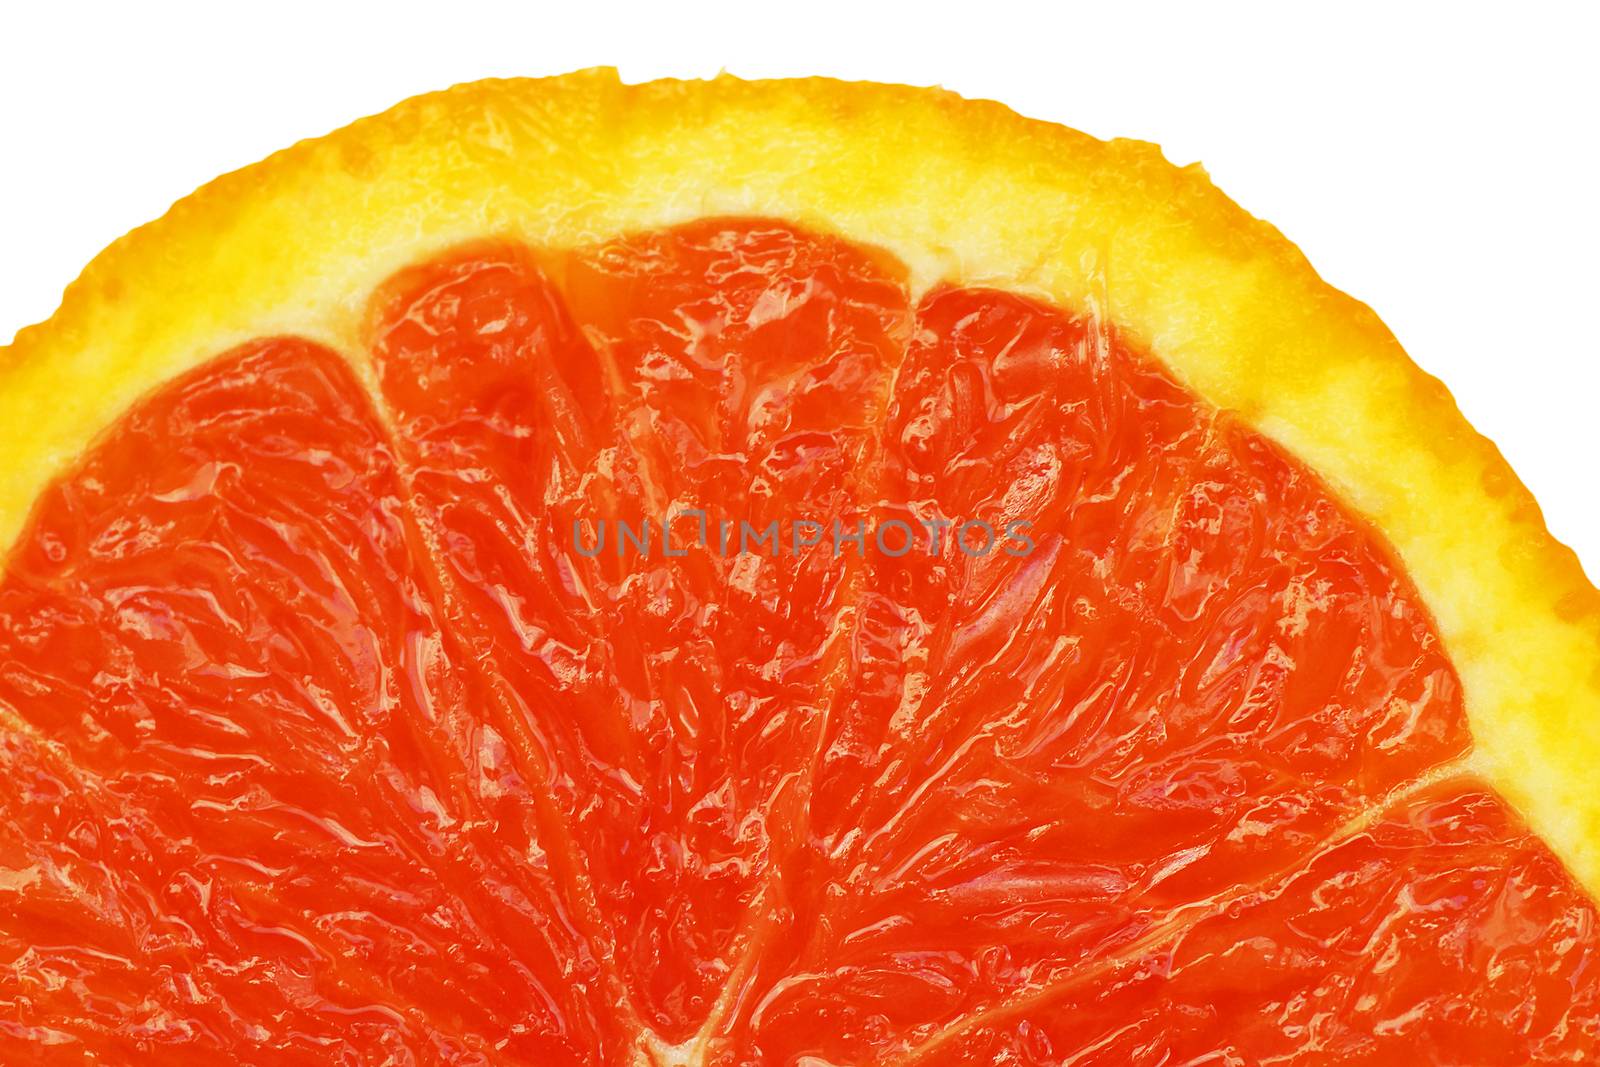 Slice of blood orange  by Mirage3